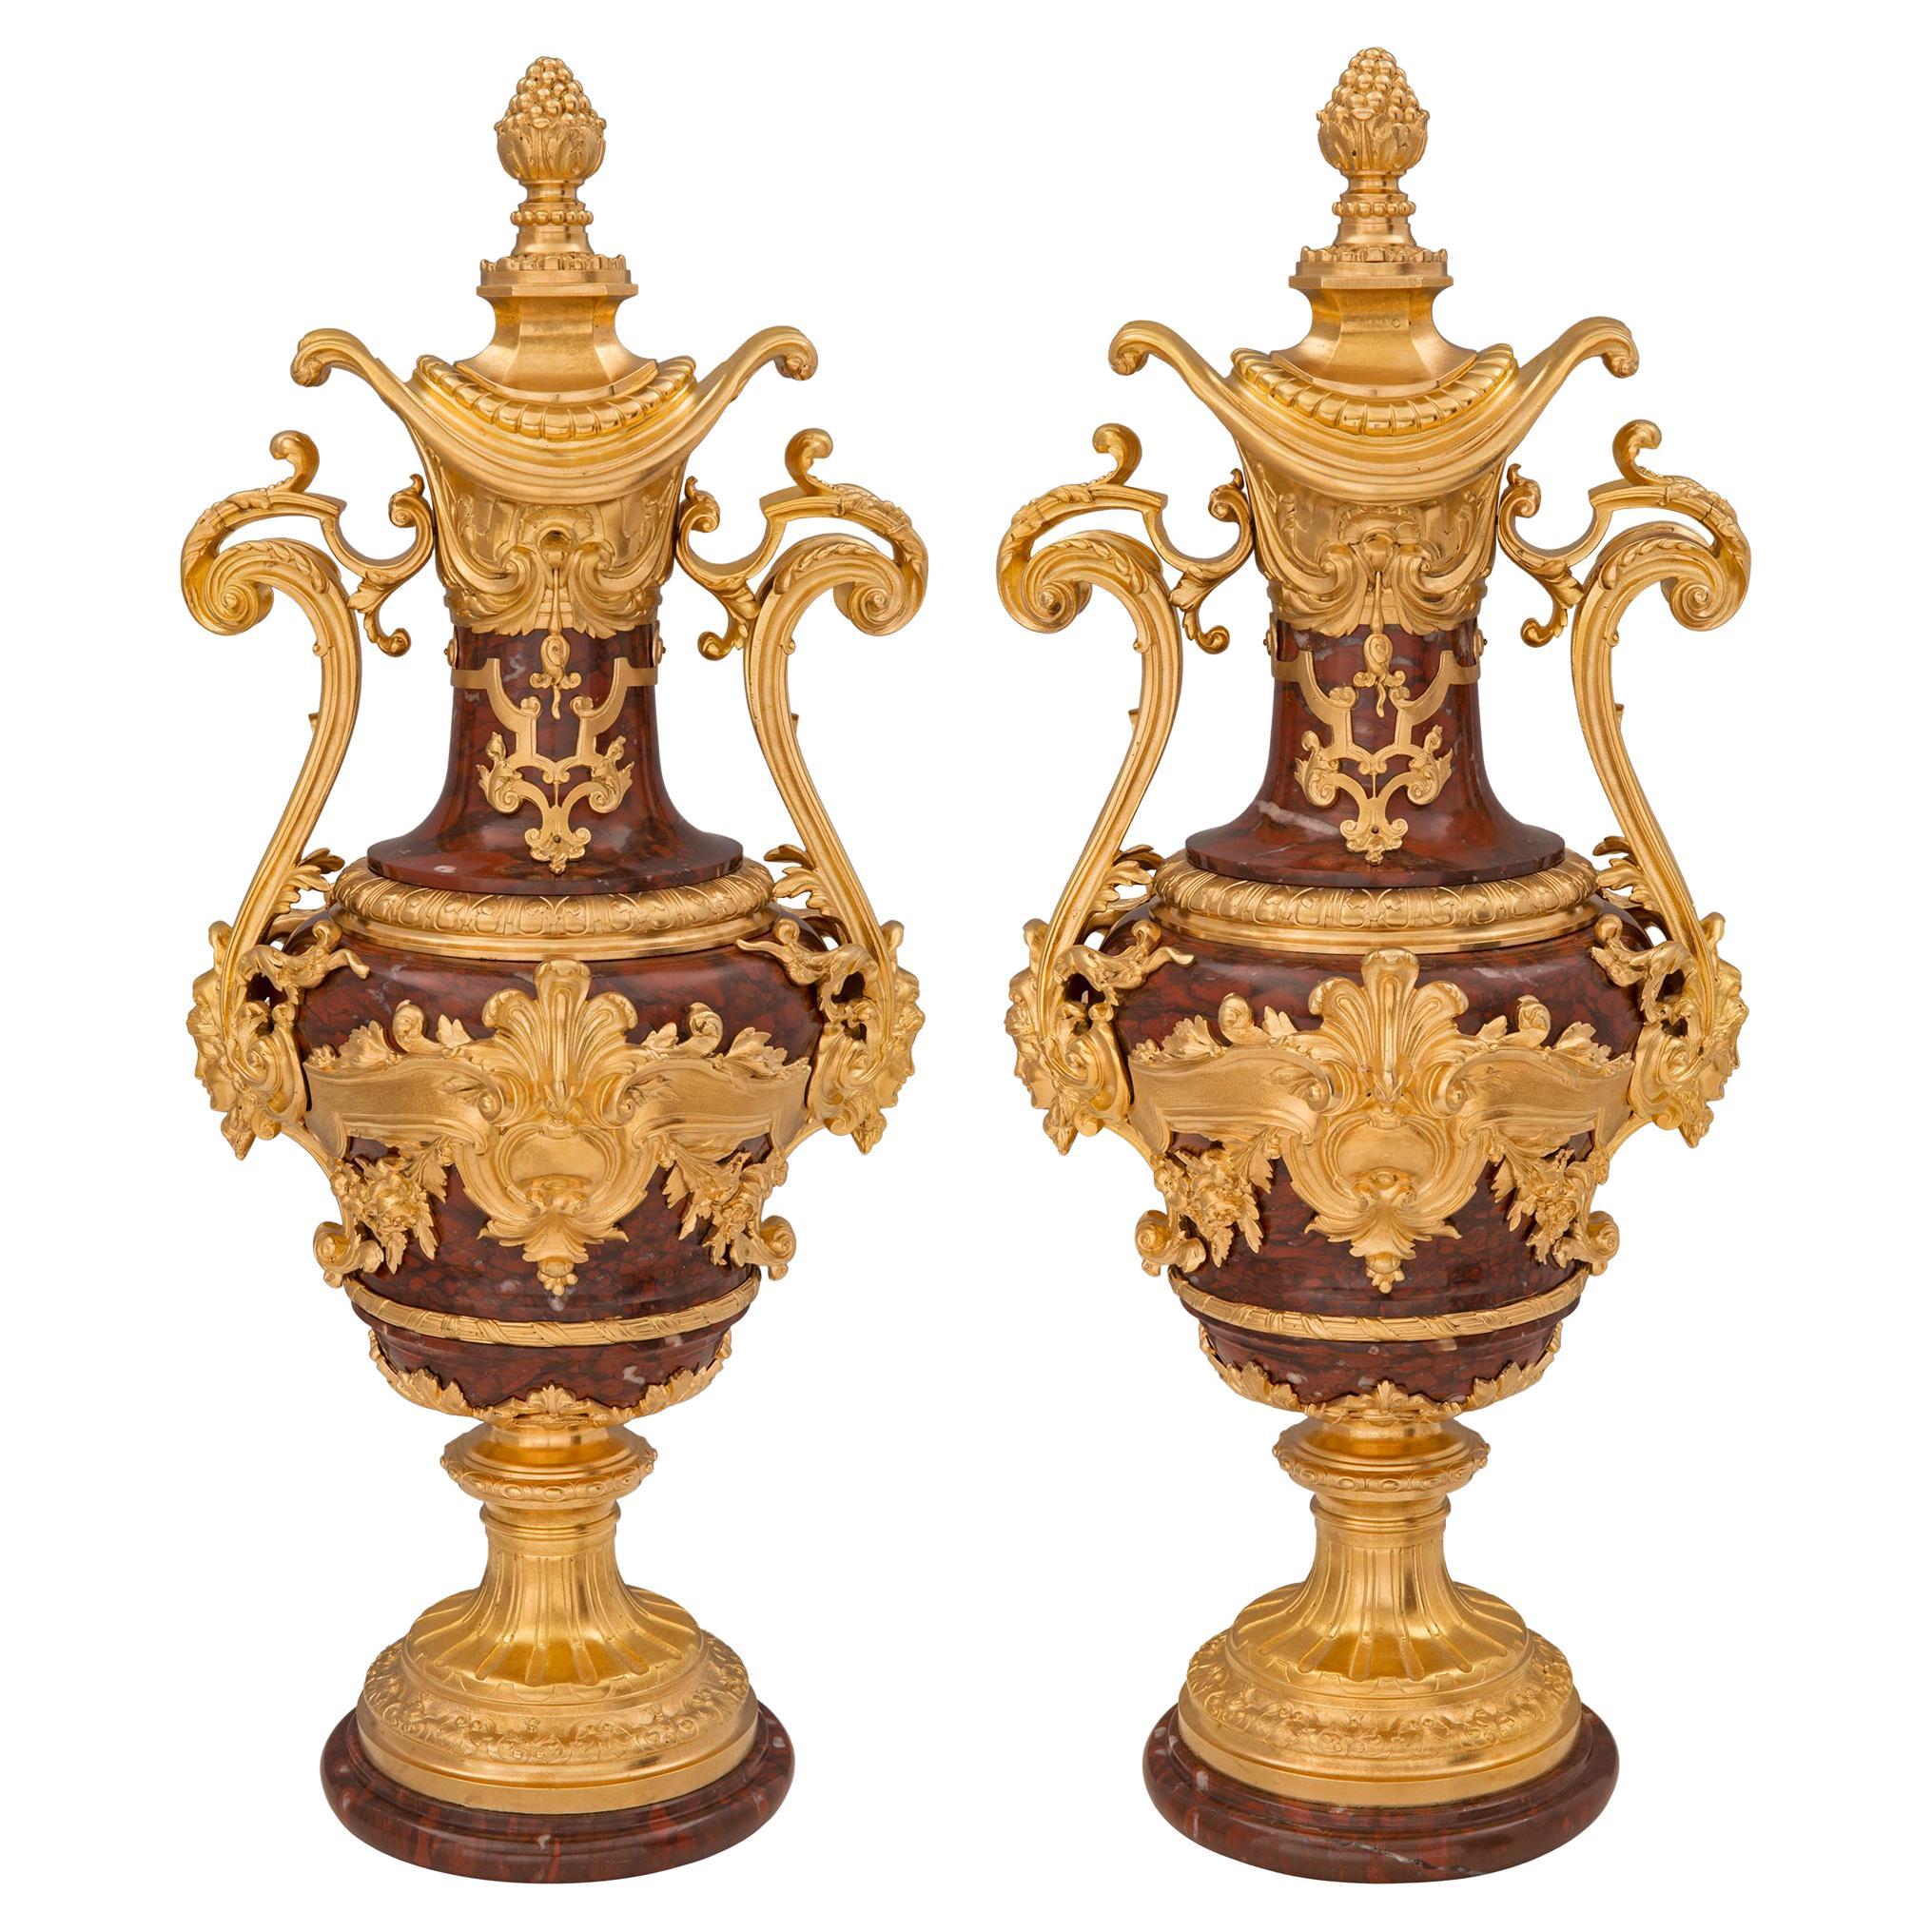 Pair of French 19th Century Louis XVI St. Belle Époque Period Urns